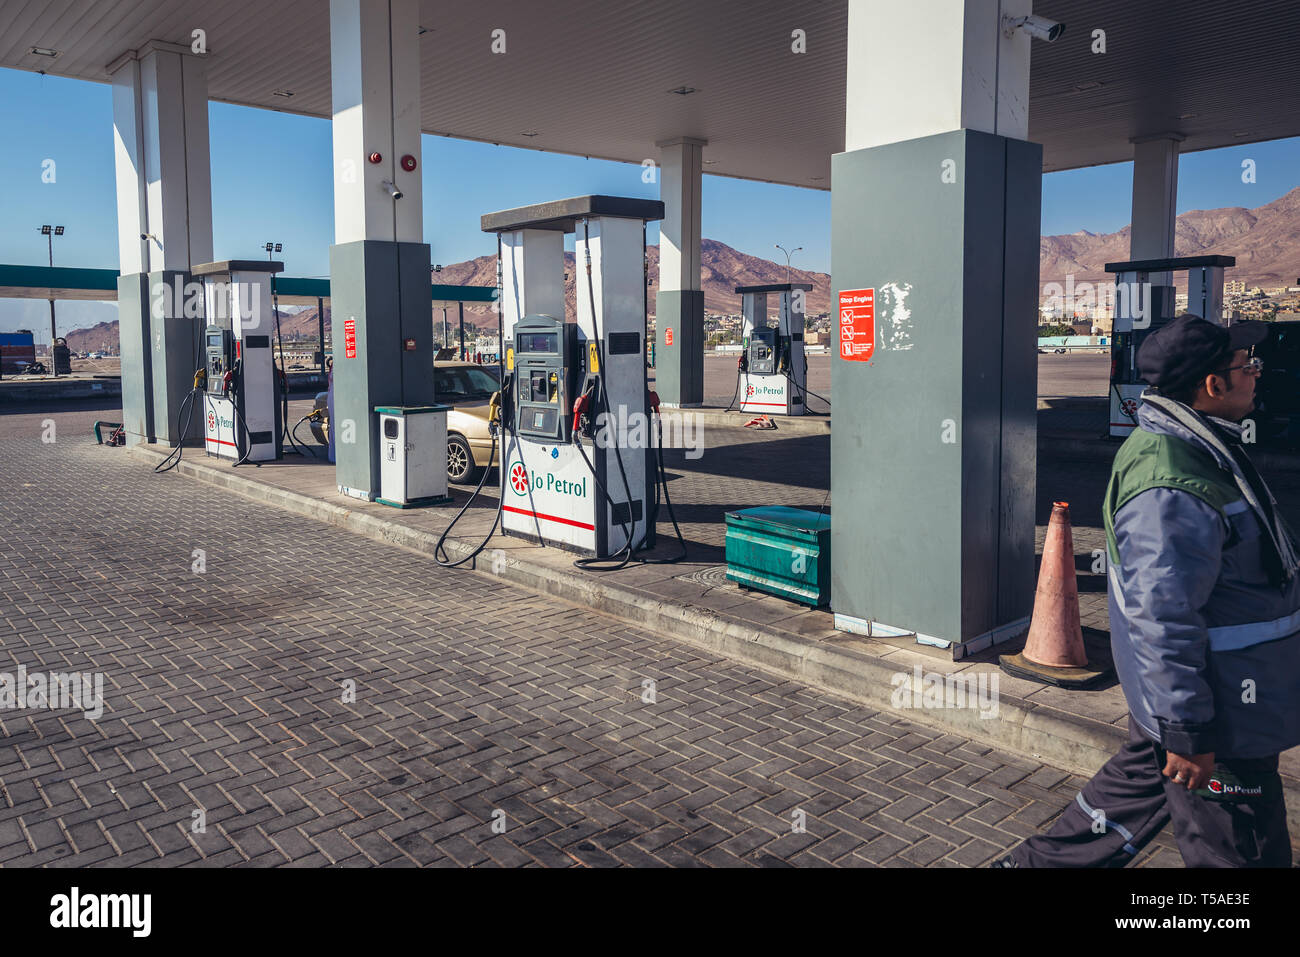 Jo Petrol gas station in Jordan Stock Photo - Alamy